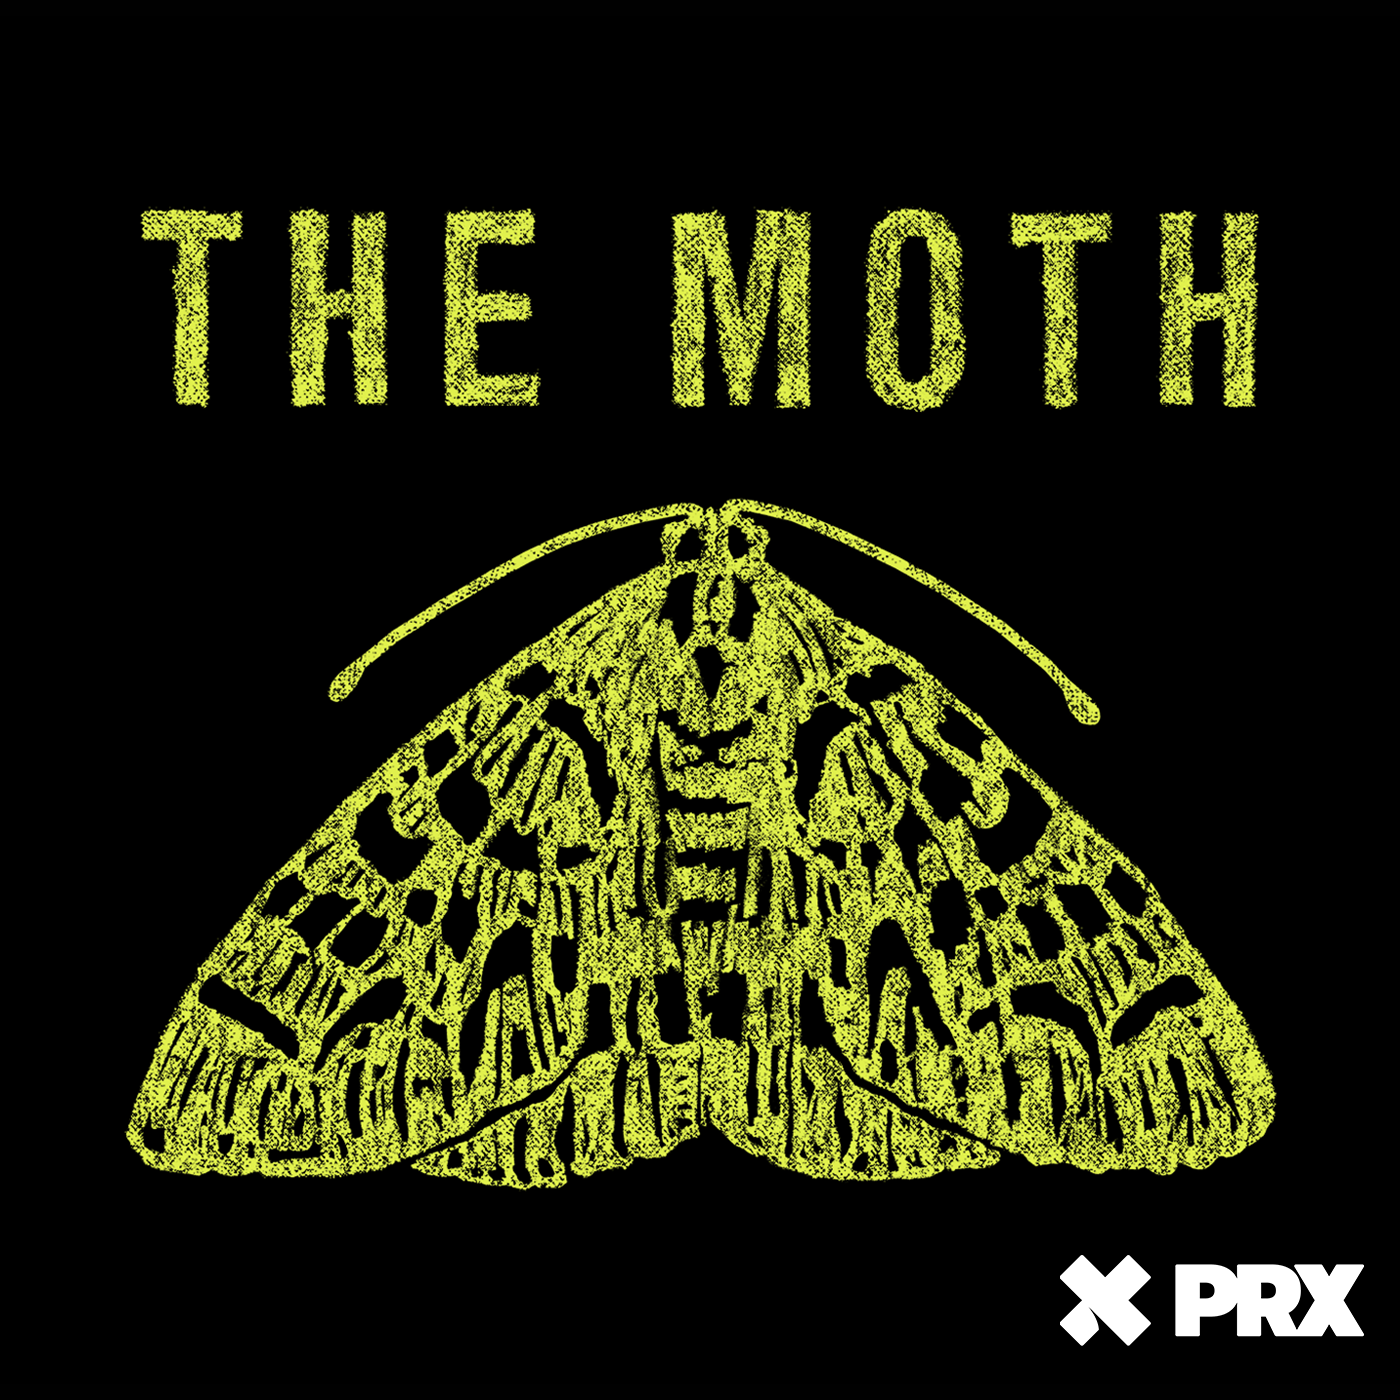 The Moth Radio Hour: Confrontations